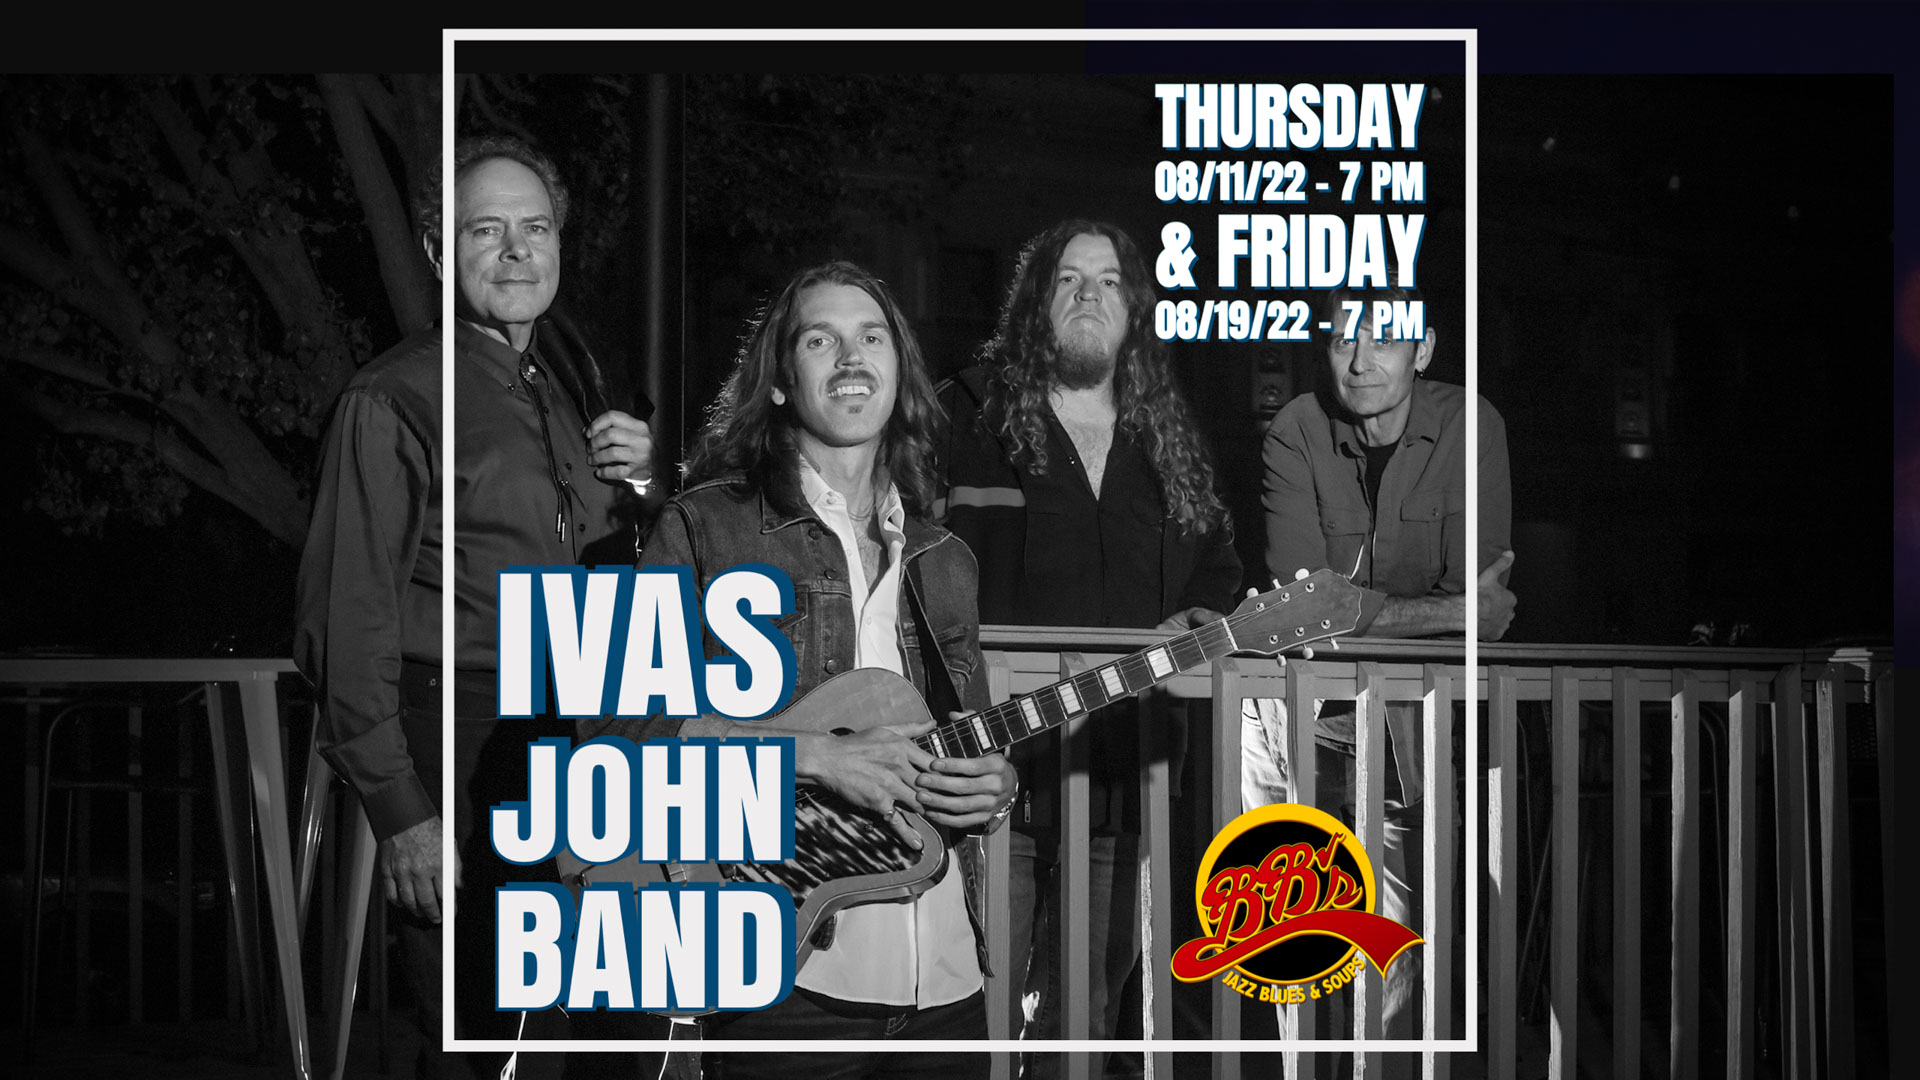 Ivas John Band